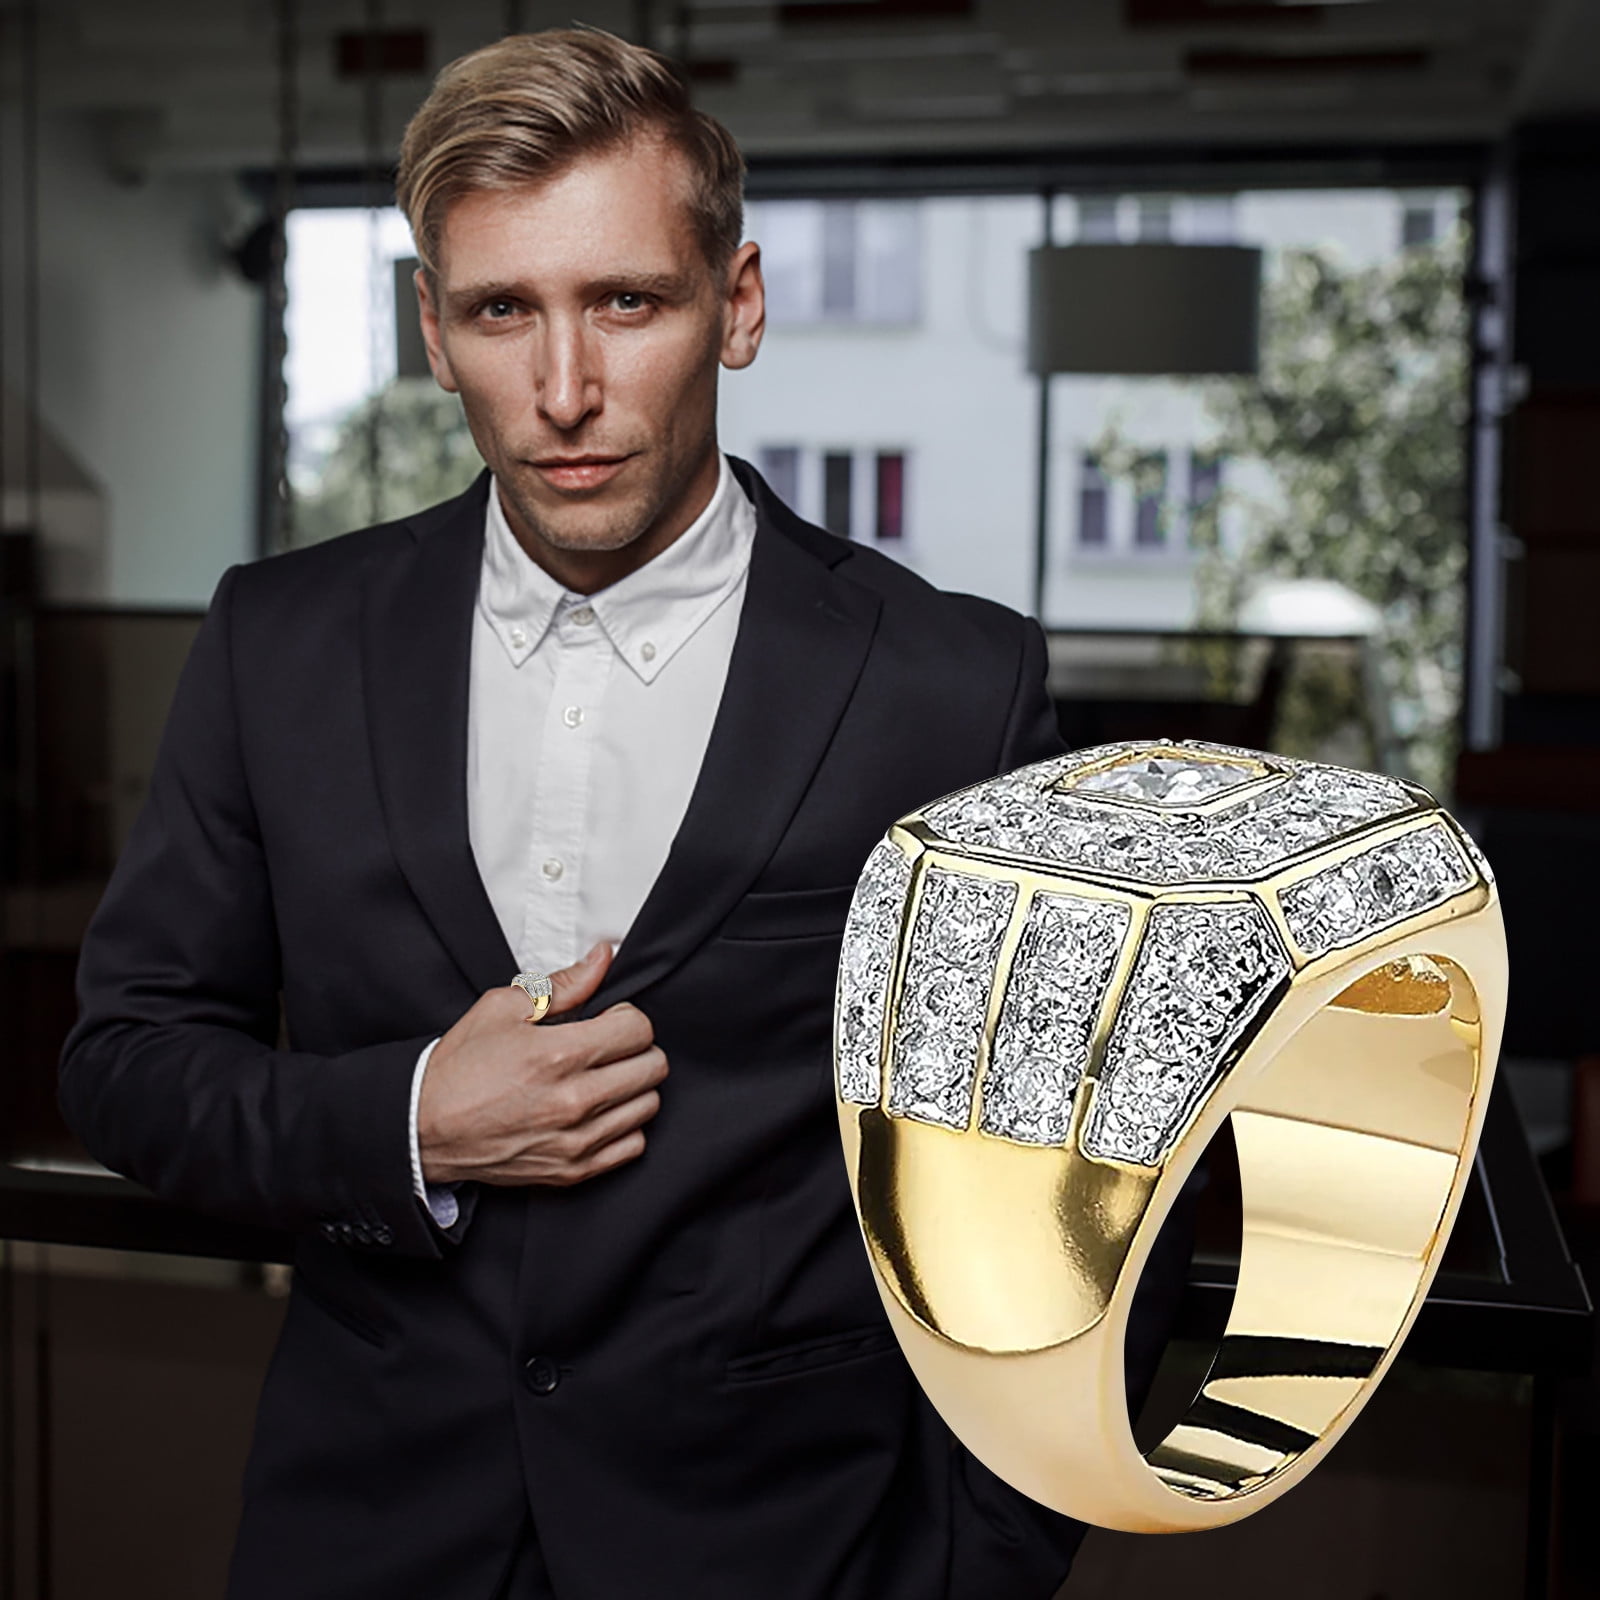 yubnlvae rings fashion unique men s ring teenage boys personalized diamond ring birthday jewelry valentine s day classic fashion ring gold 10 fdf52cc0 5324 4757 b725 5758021a8082.349053644d4ddd47e022fdc7777c7a49